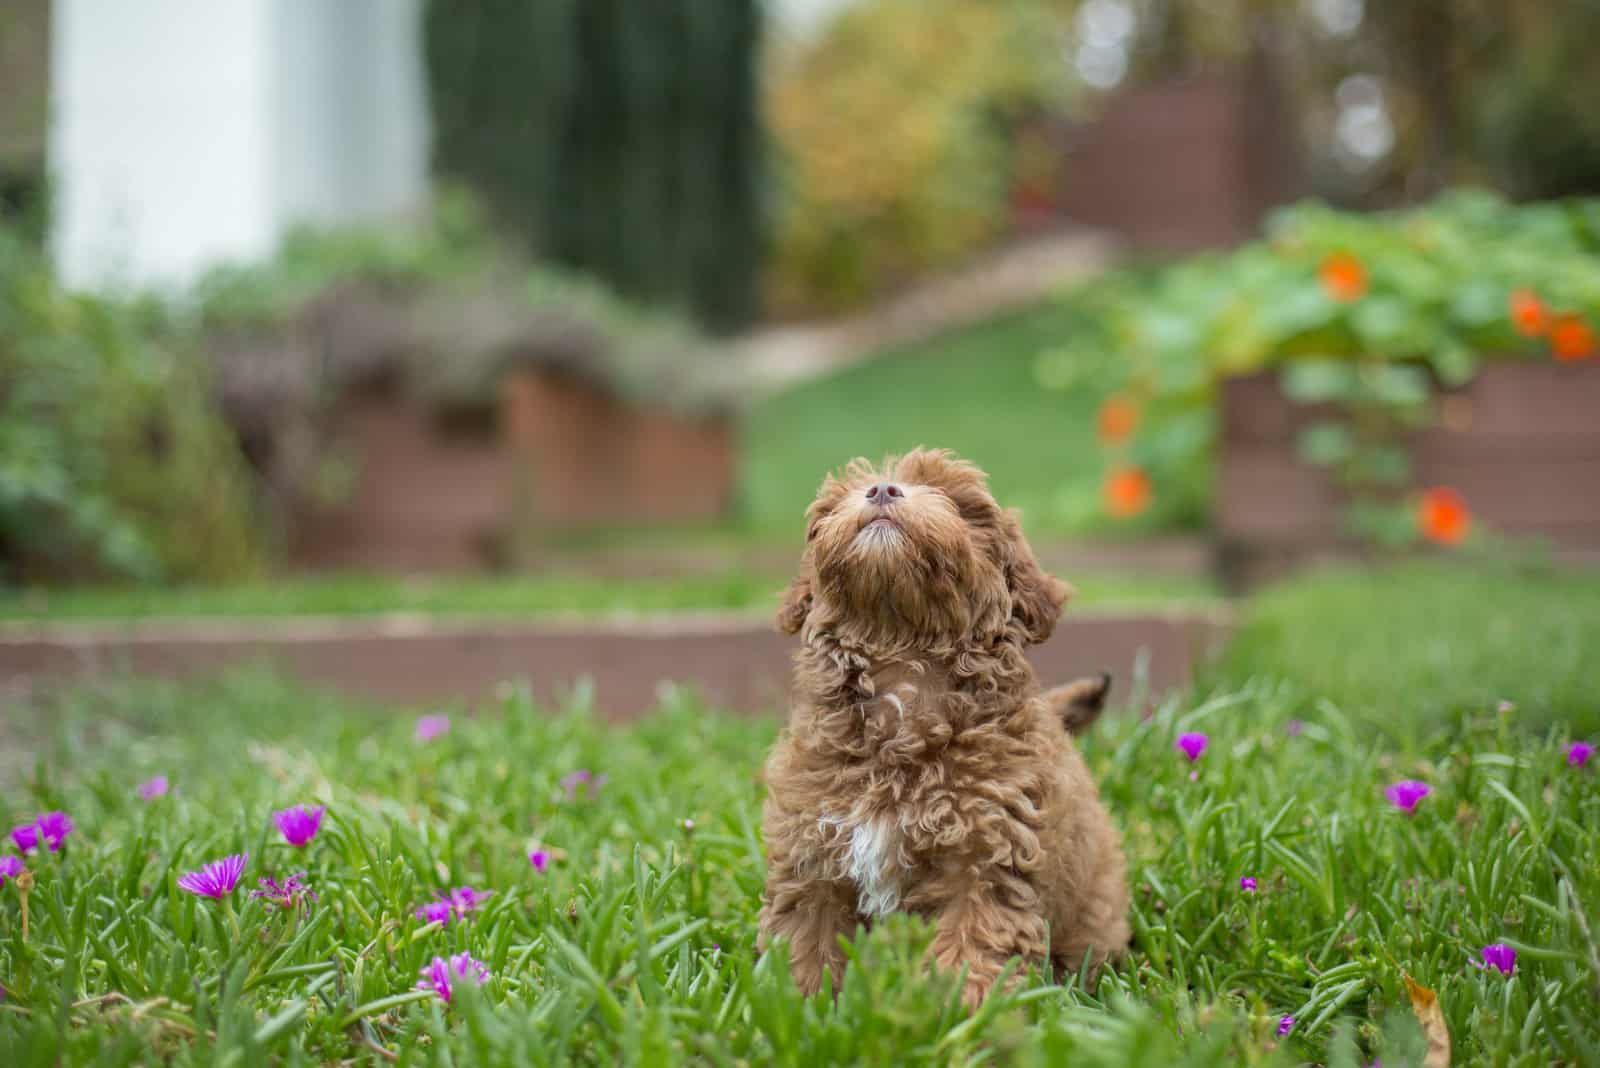 havapoo puppy on grass